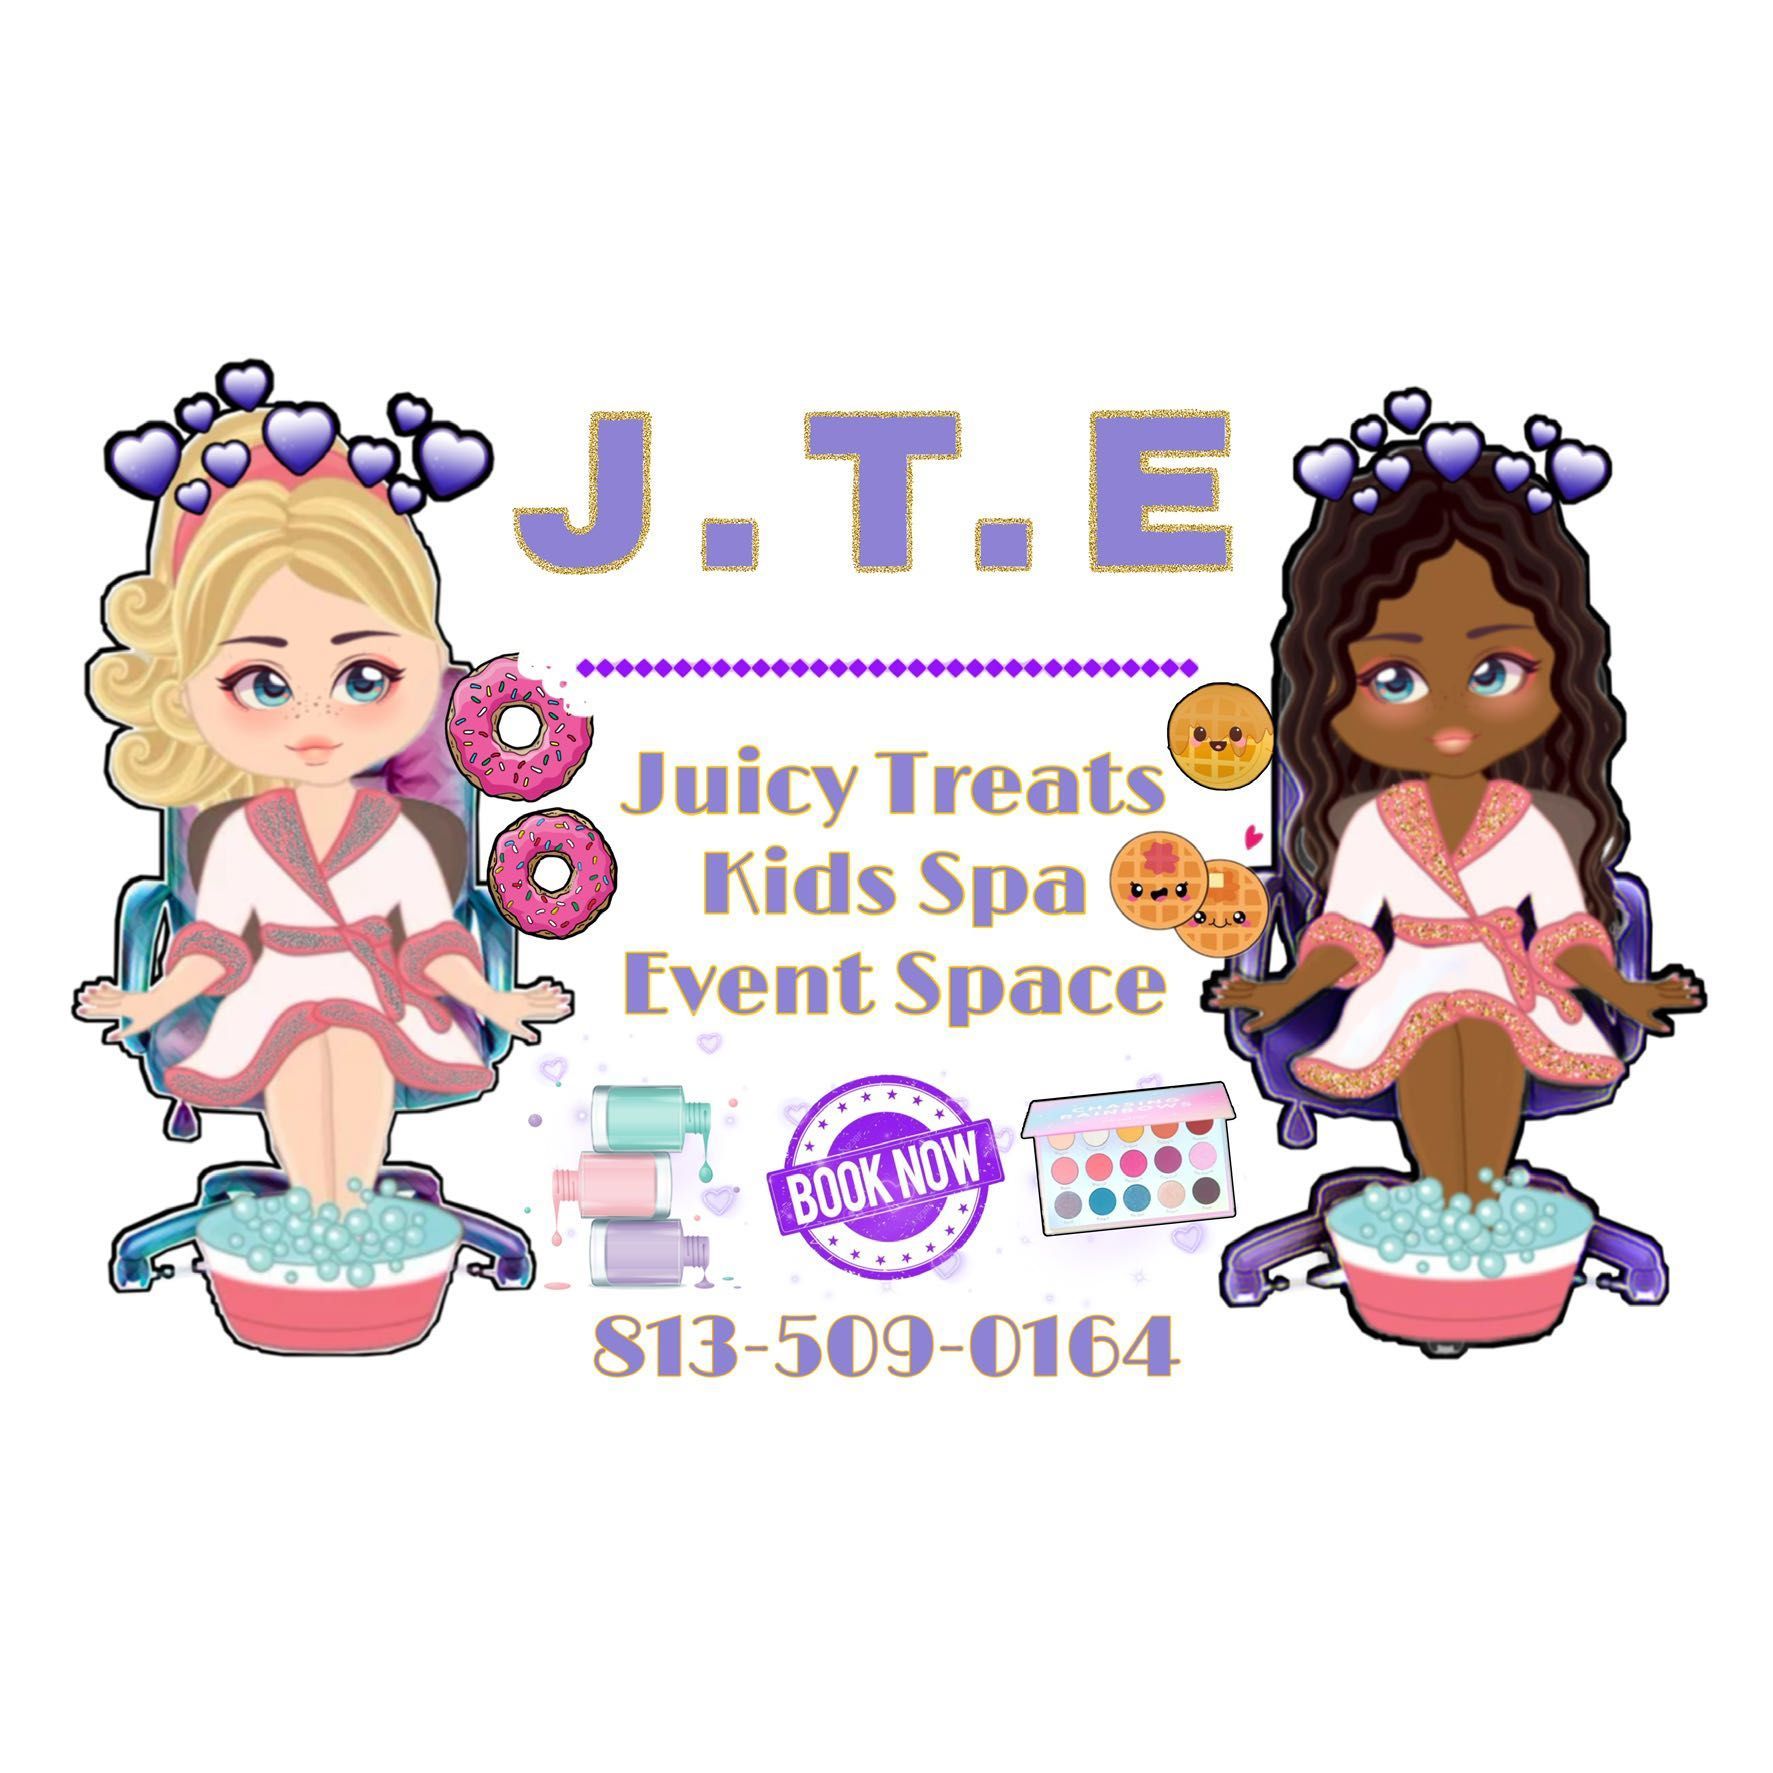 J.T.E, 12421 N Florida Ave, Tampa, 33612